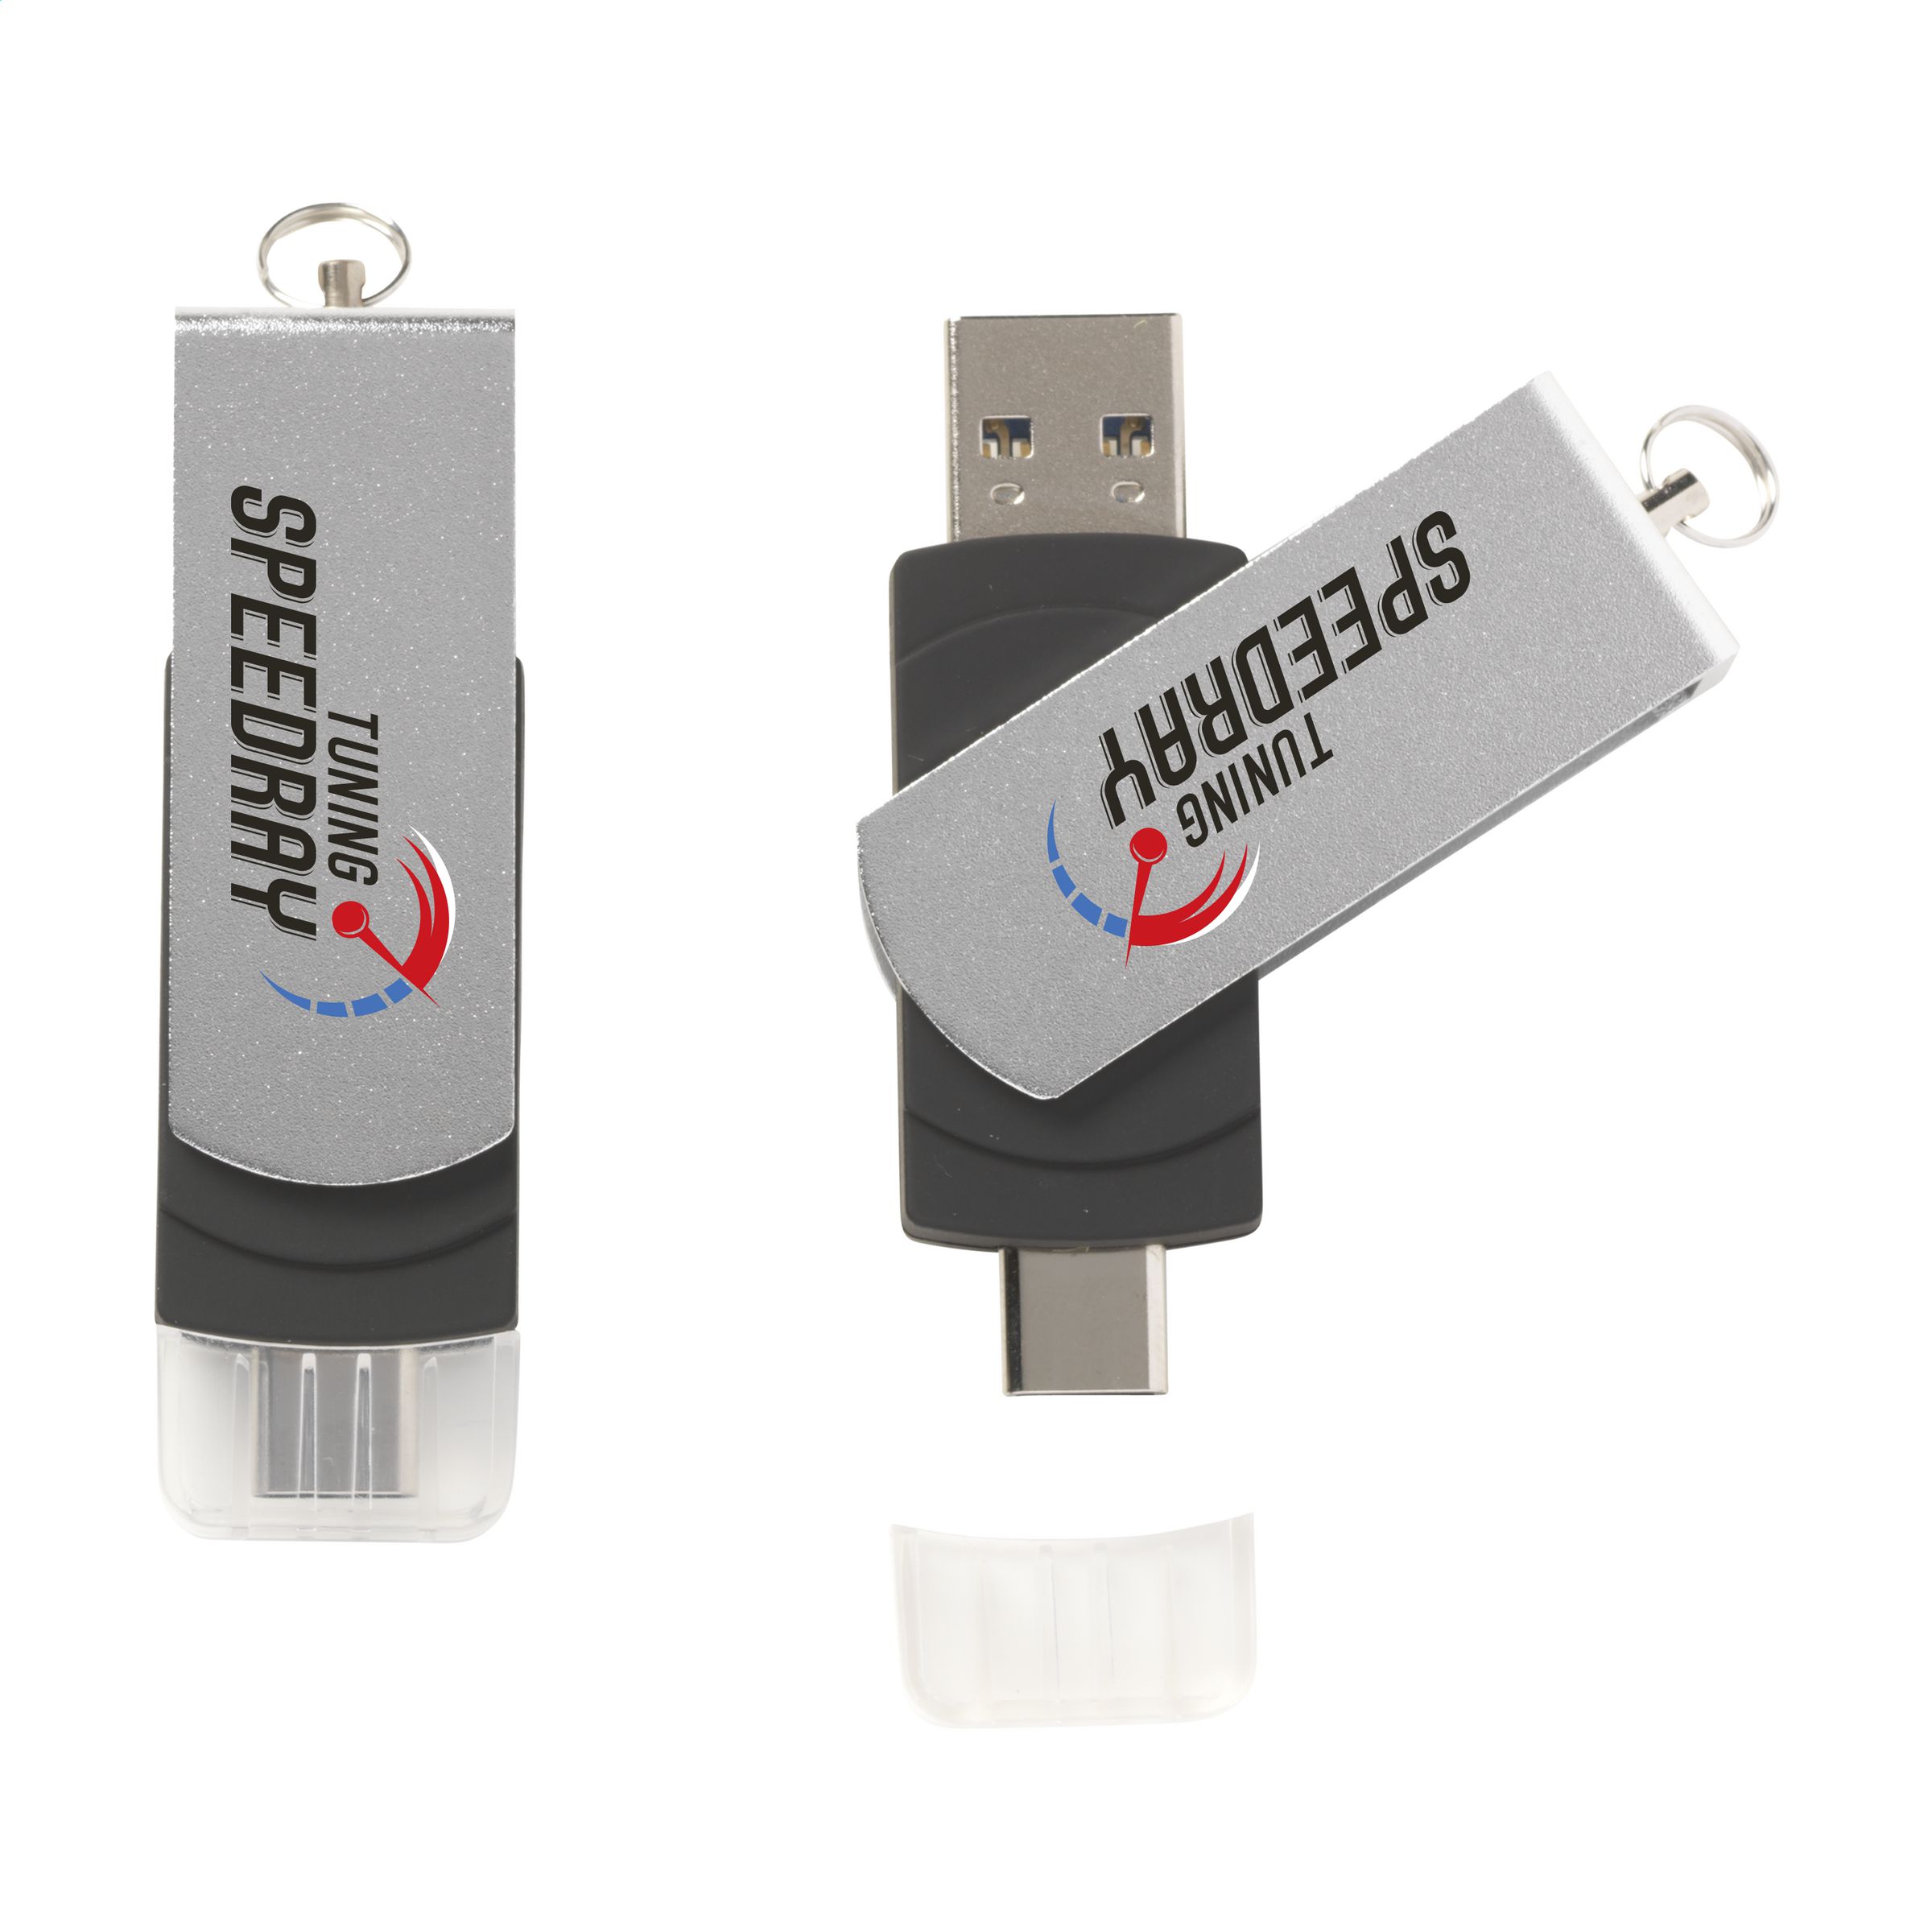 Ashtead USB Stick with Dual Connectors - Hollingworth